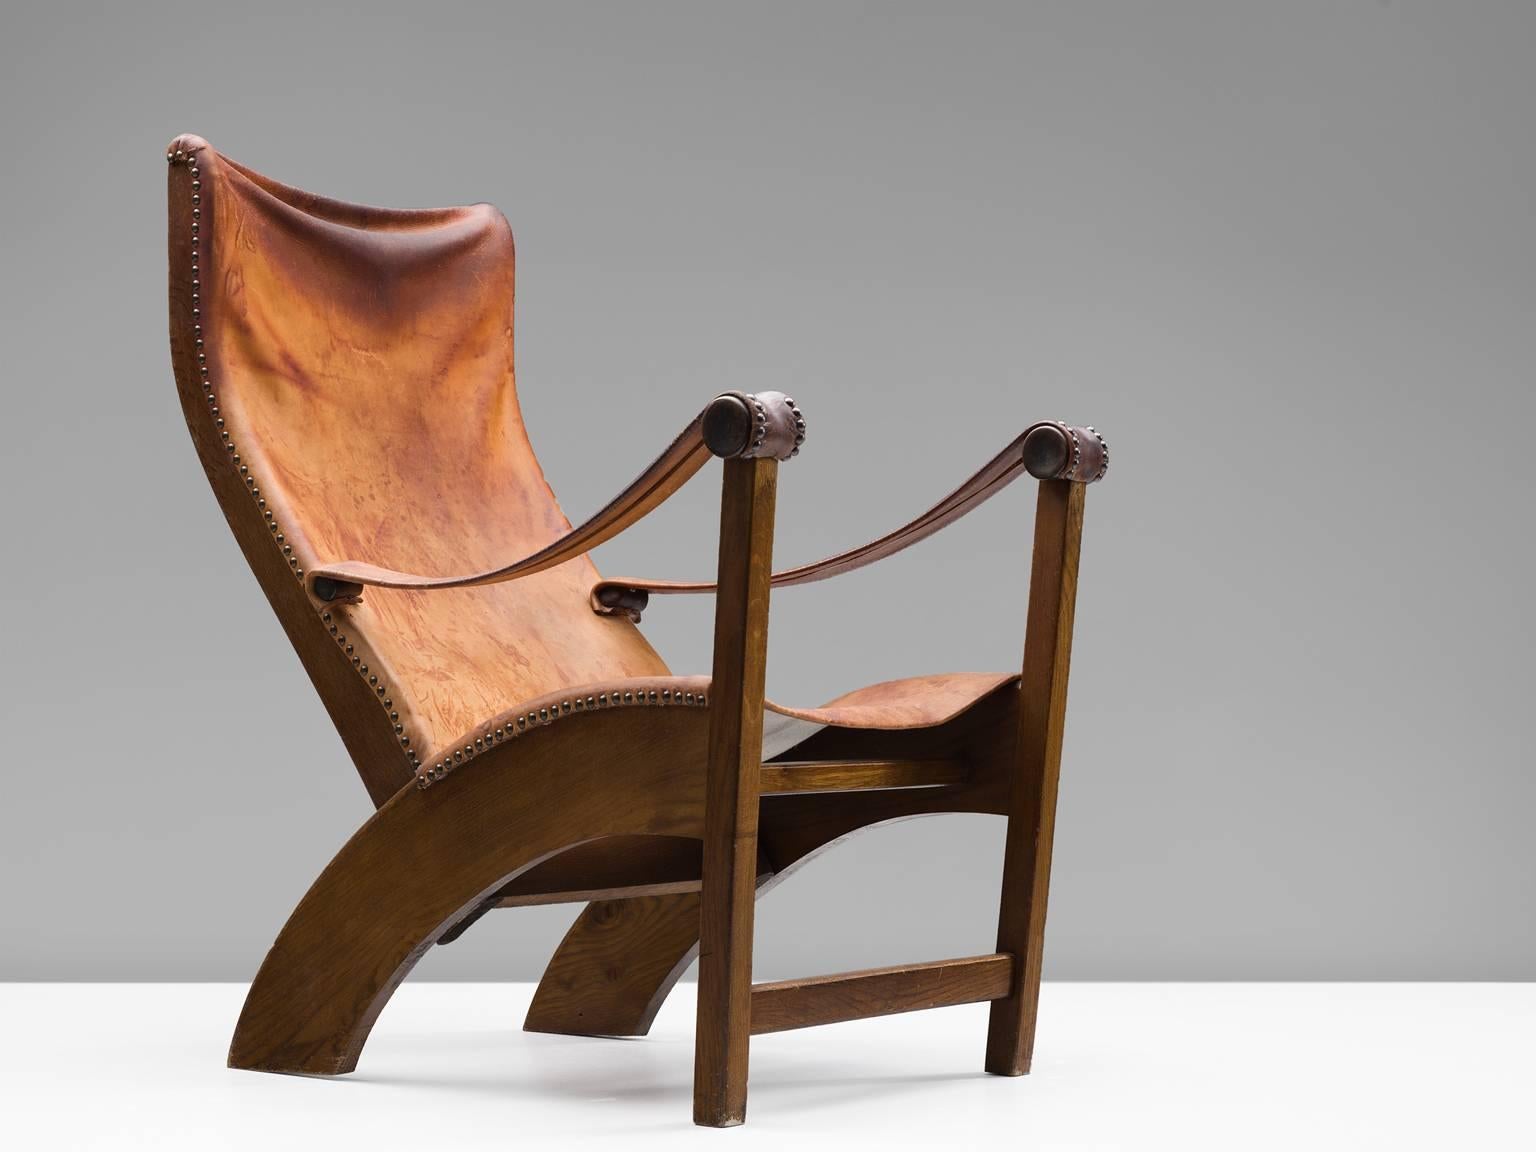 Lounge chair model 'Københavnerstolen', in oak and leather, by Mogens Voltelen for cabinetmaker Niels Vodder, Denmark, 1936. 

Stunning Copenhagen lounge chair by Mogens Voltelen (1908-1995). Early and rare variant in which the armrest is attached